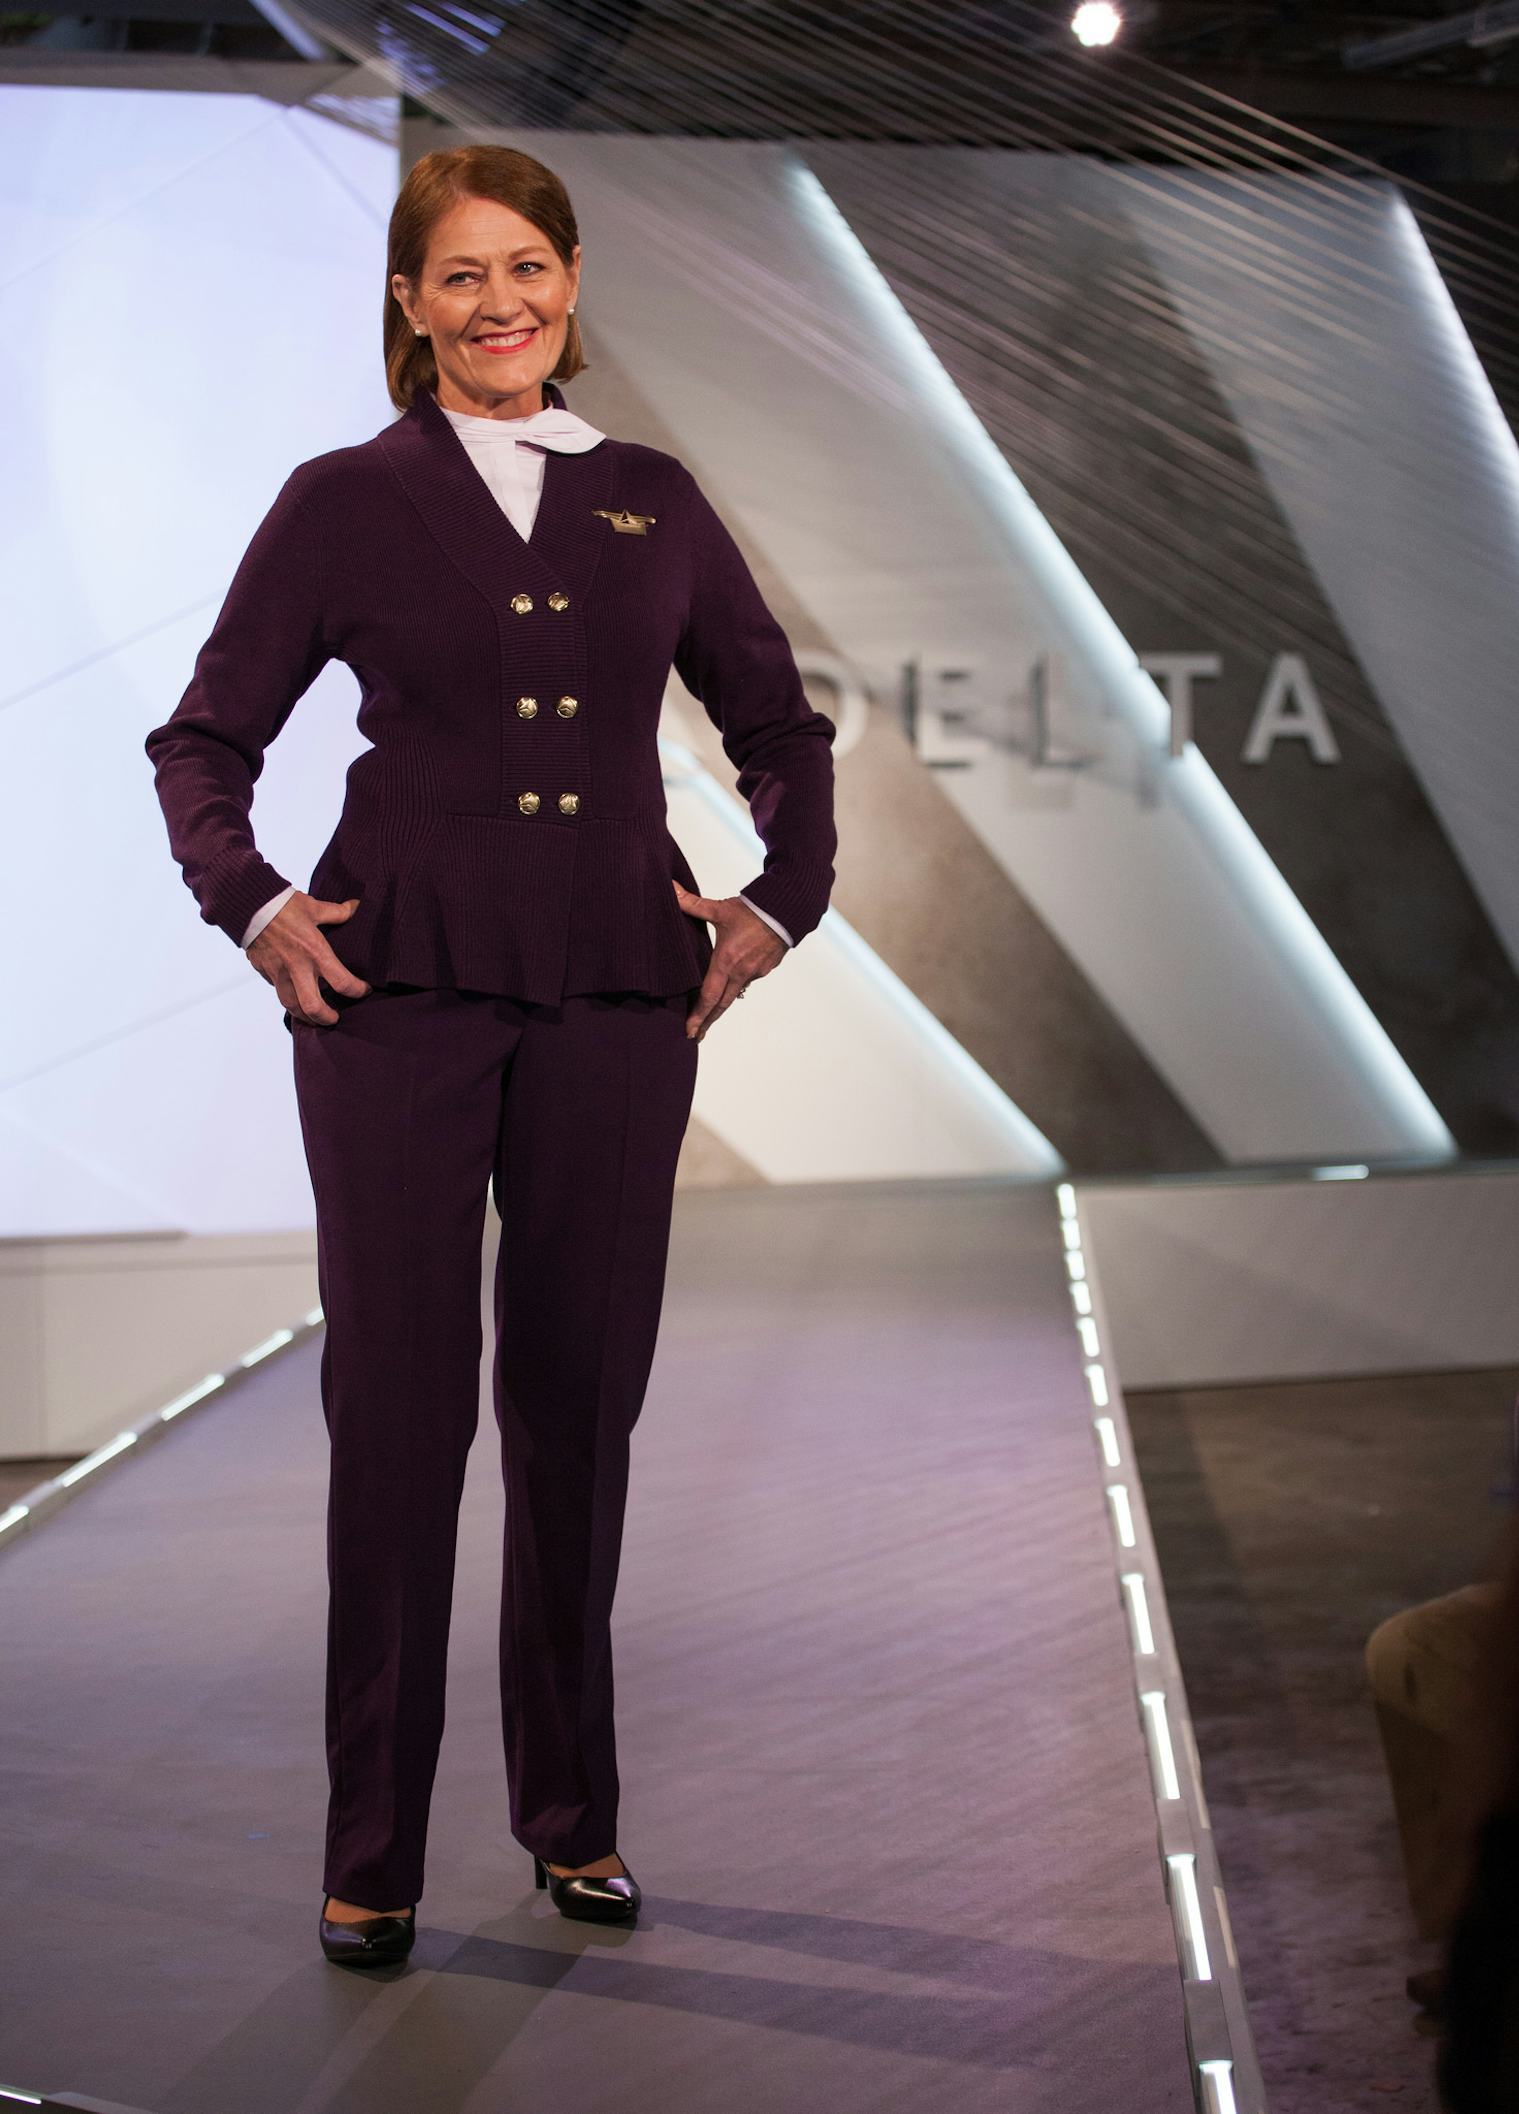 Zac Posen Designed Delta Airline's New Uniforms & They Are So High Fashion